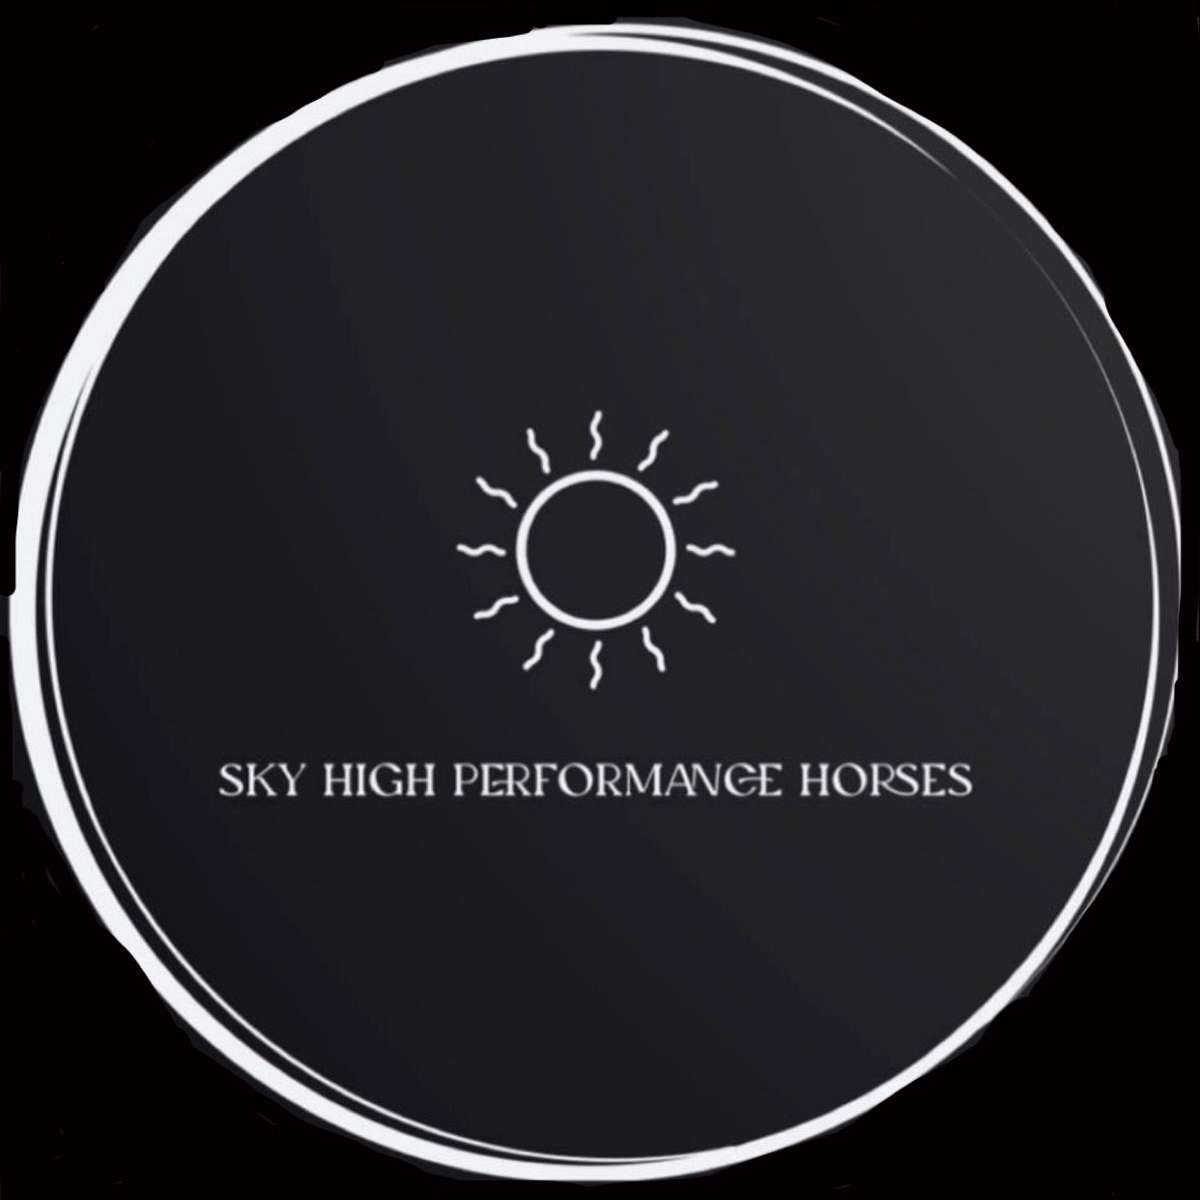 Sky High Performance Horses